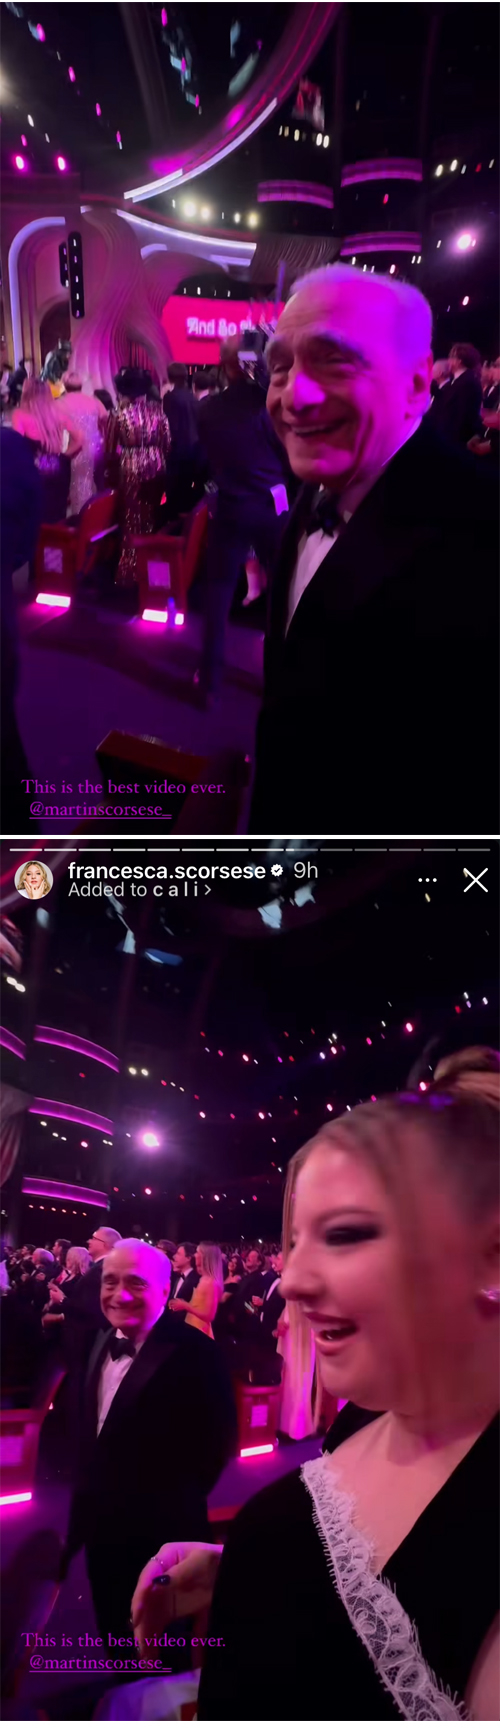 Screenshots from Francesca Scorsese's Instagram stories